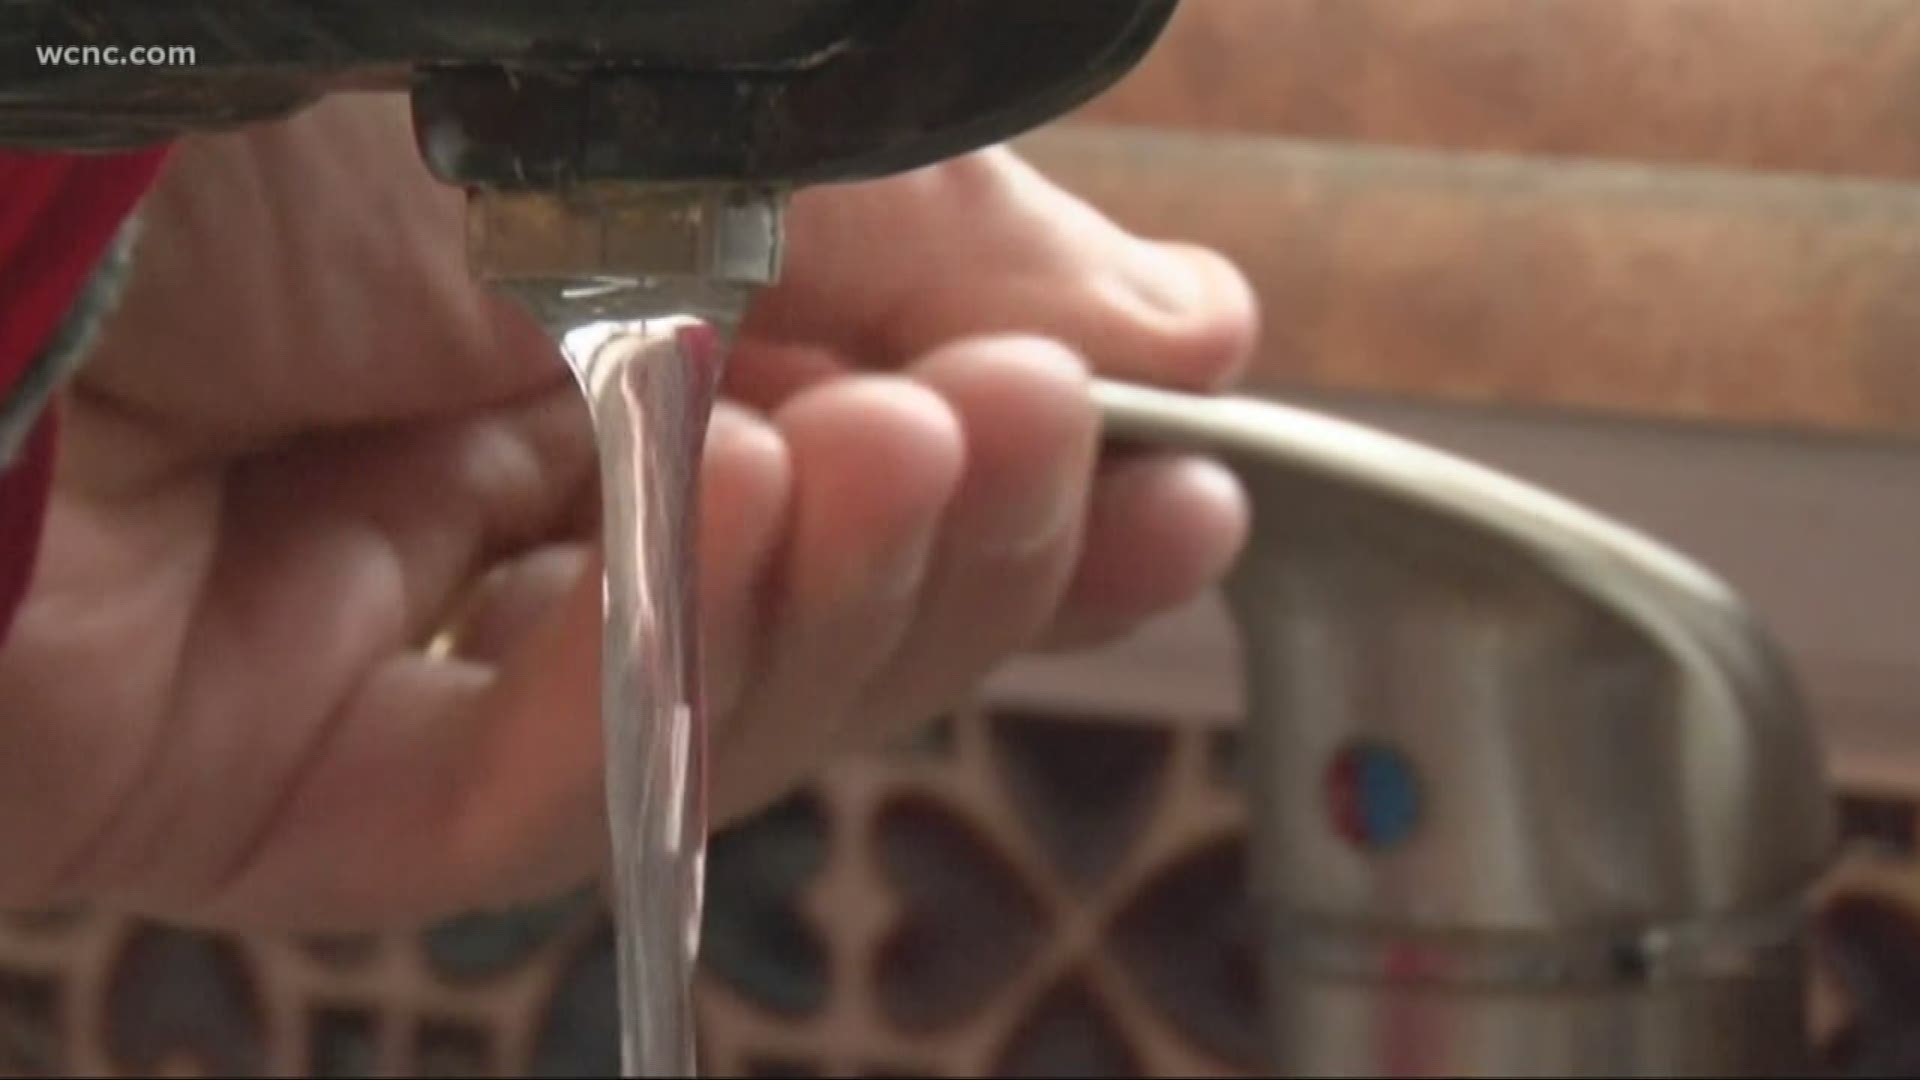 Orangeburg boil water advisory underway for several